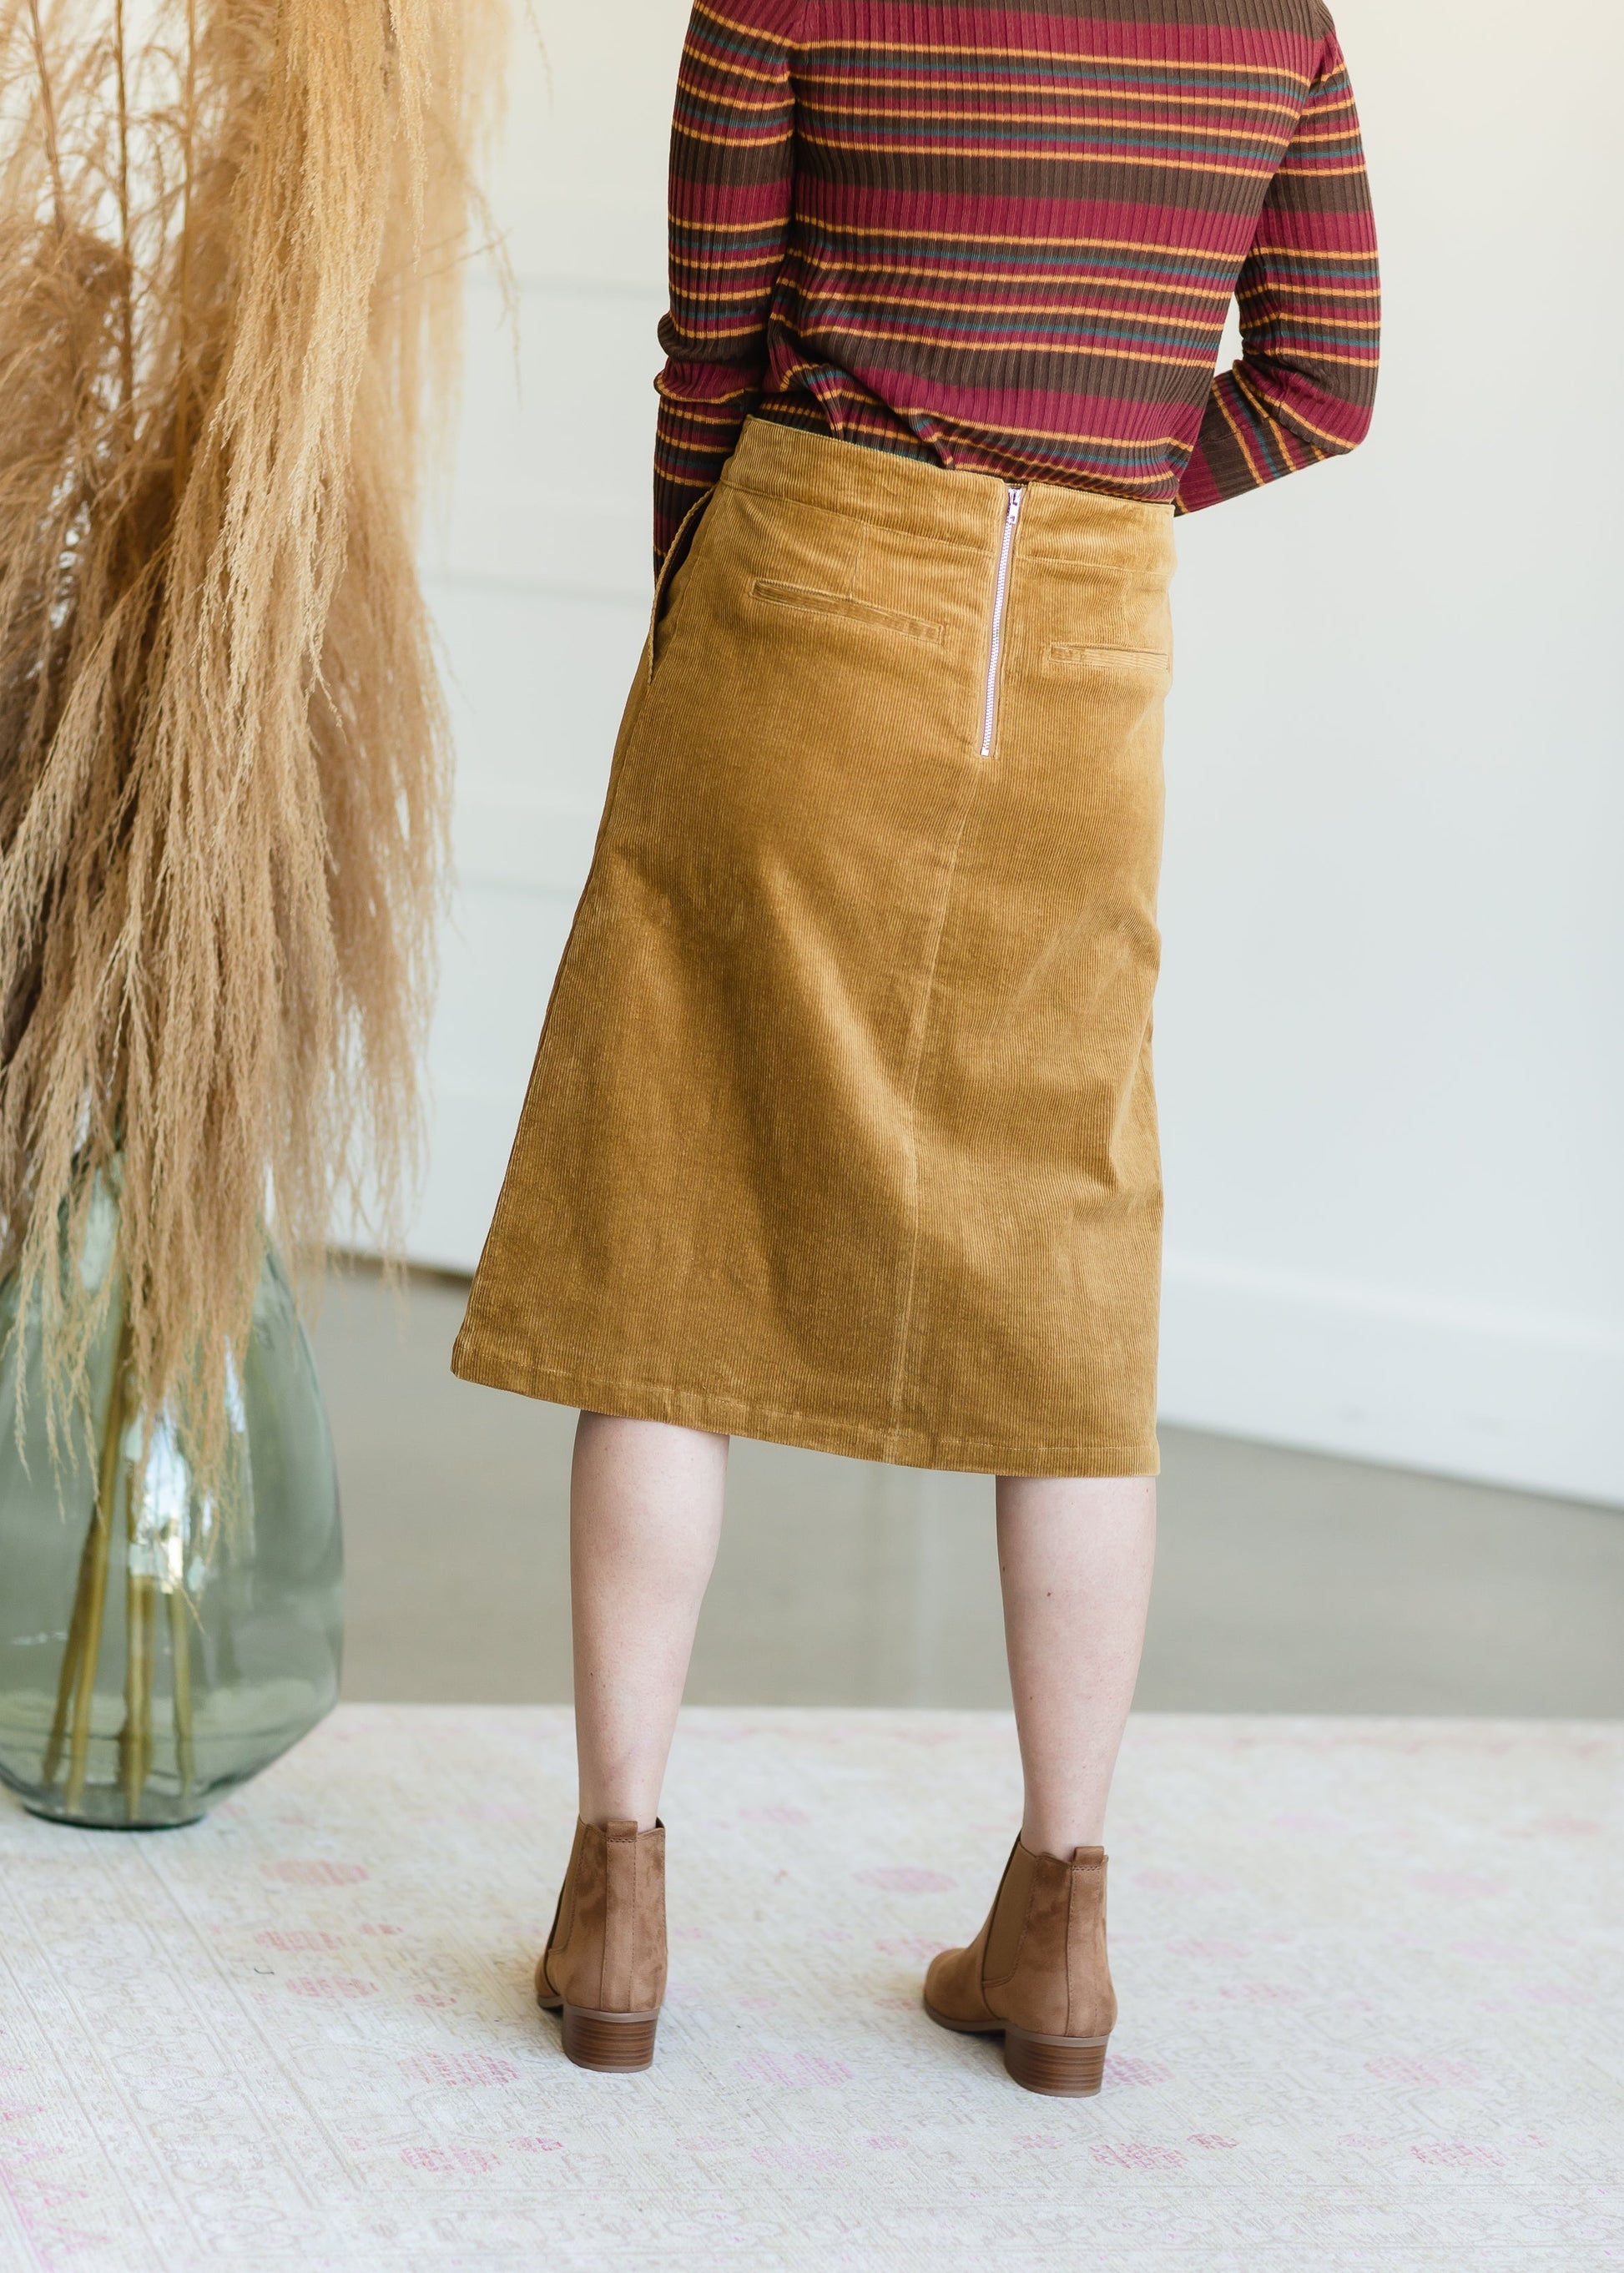 Aubrey Corduroy Back Zip Midi Skirt - FINAL SALE Skirts